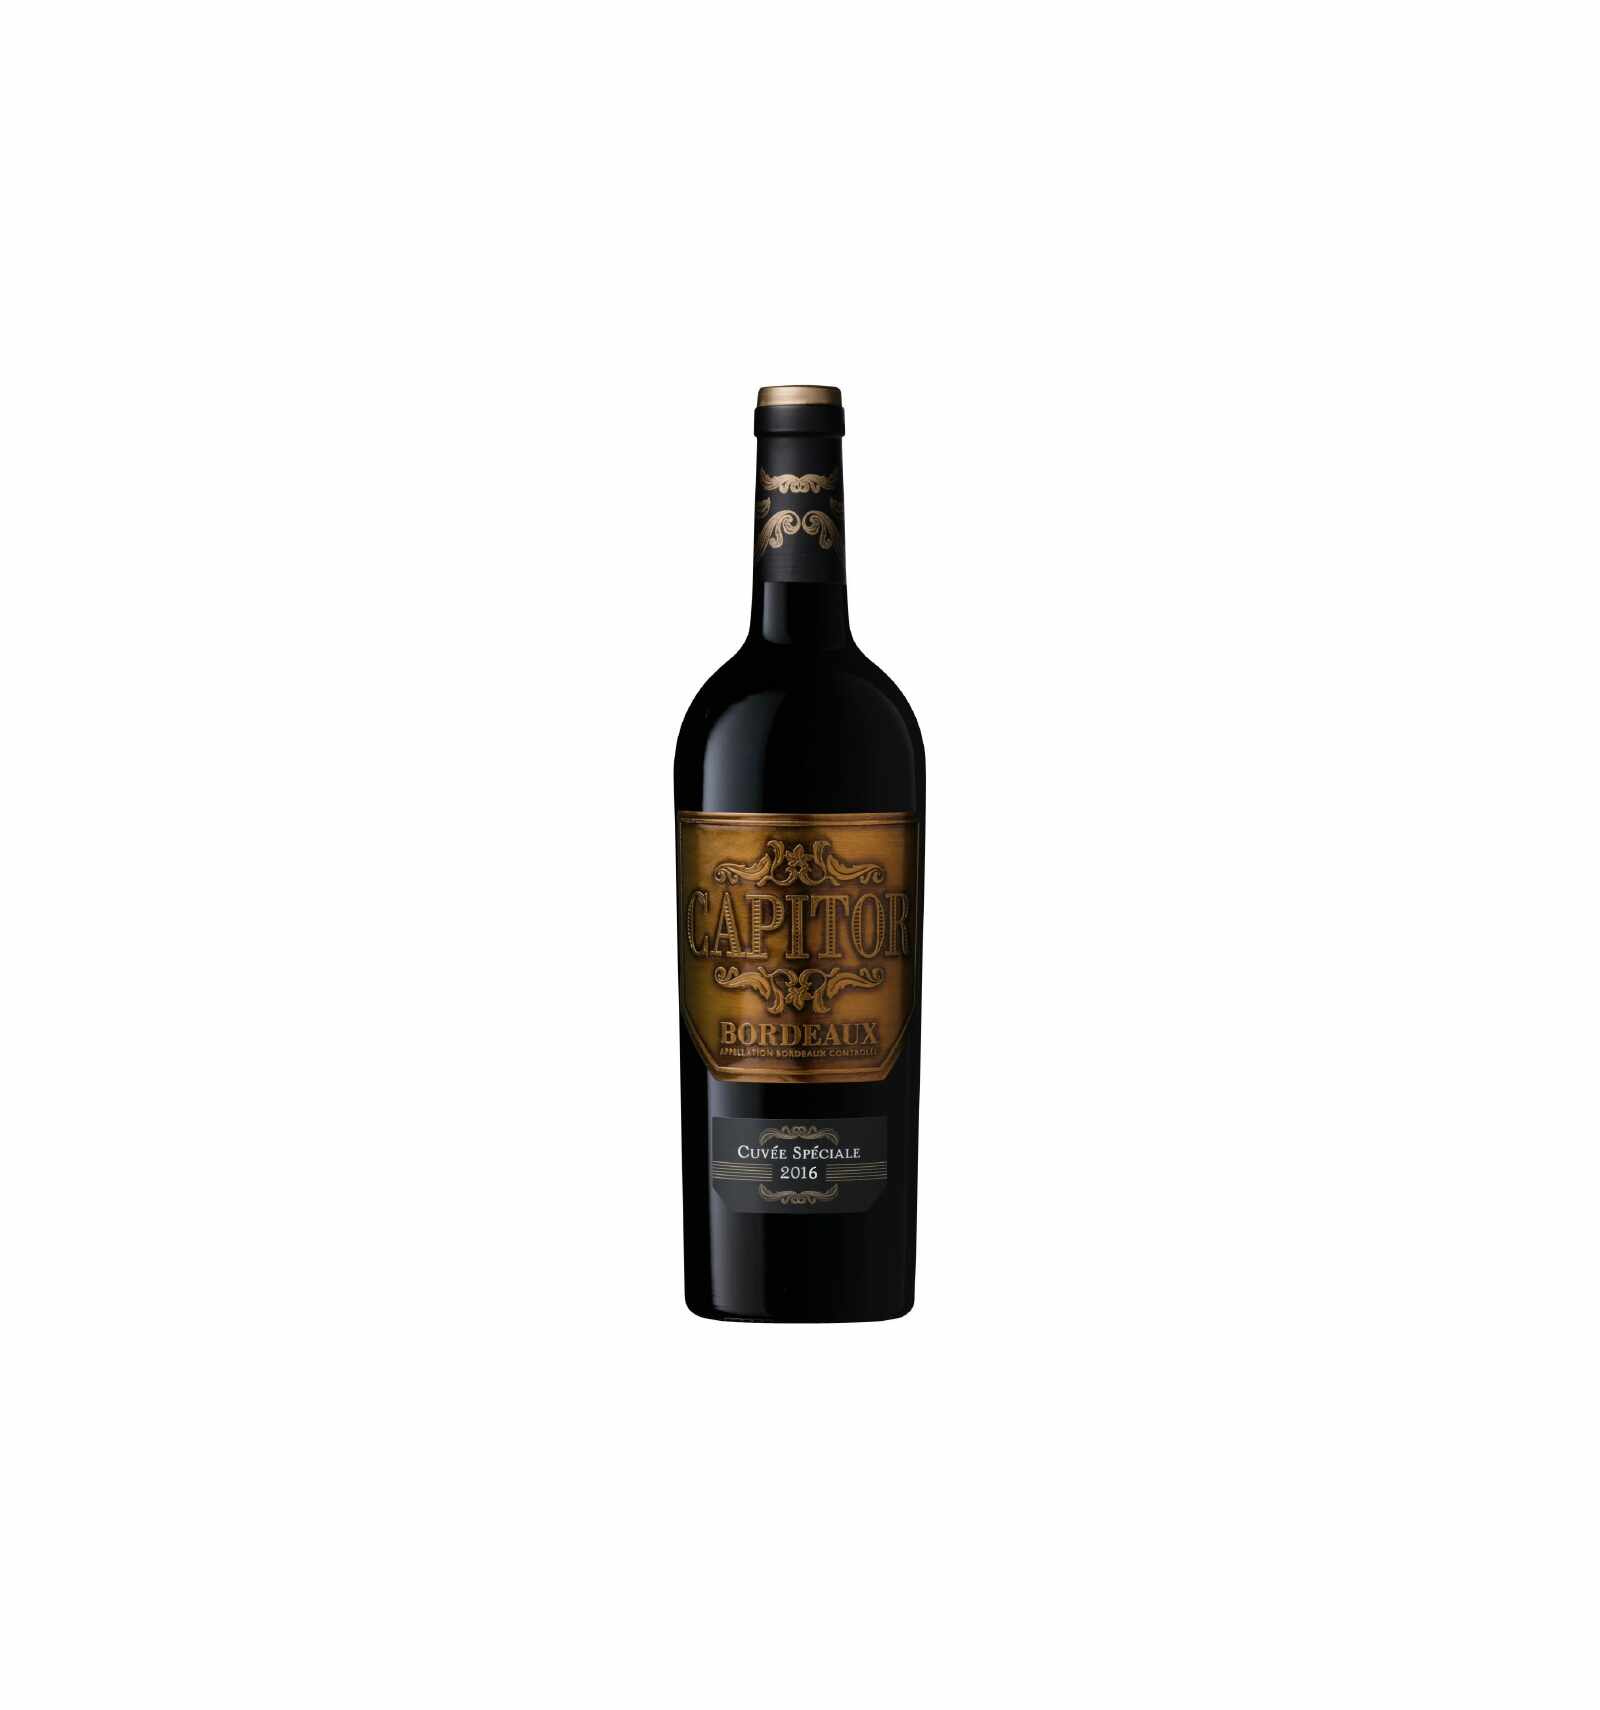 Vin rosu, Cupaj, Capitor Bordeaux, 2016, 0.75L, 13% alc., Franta